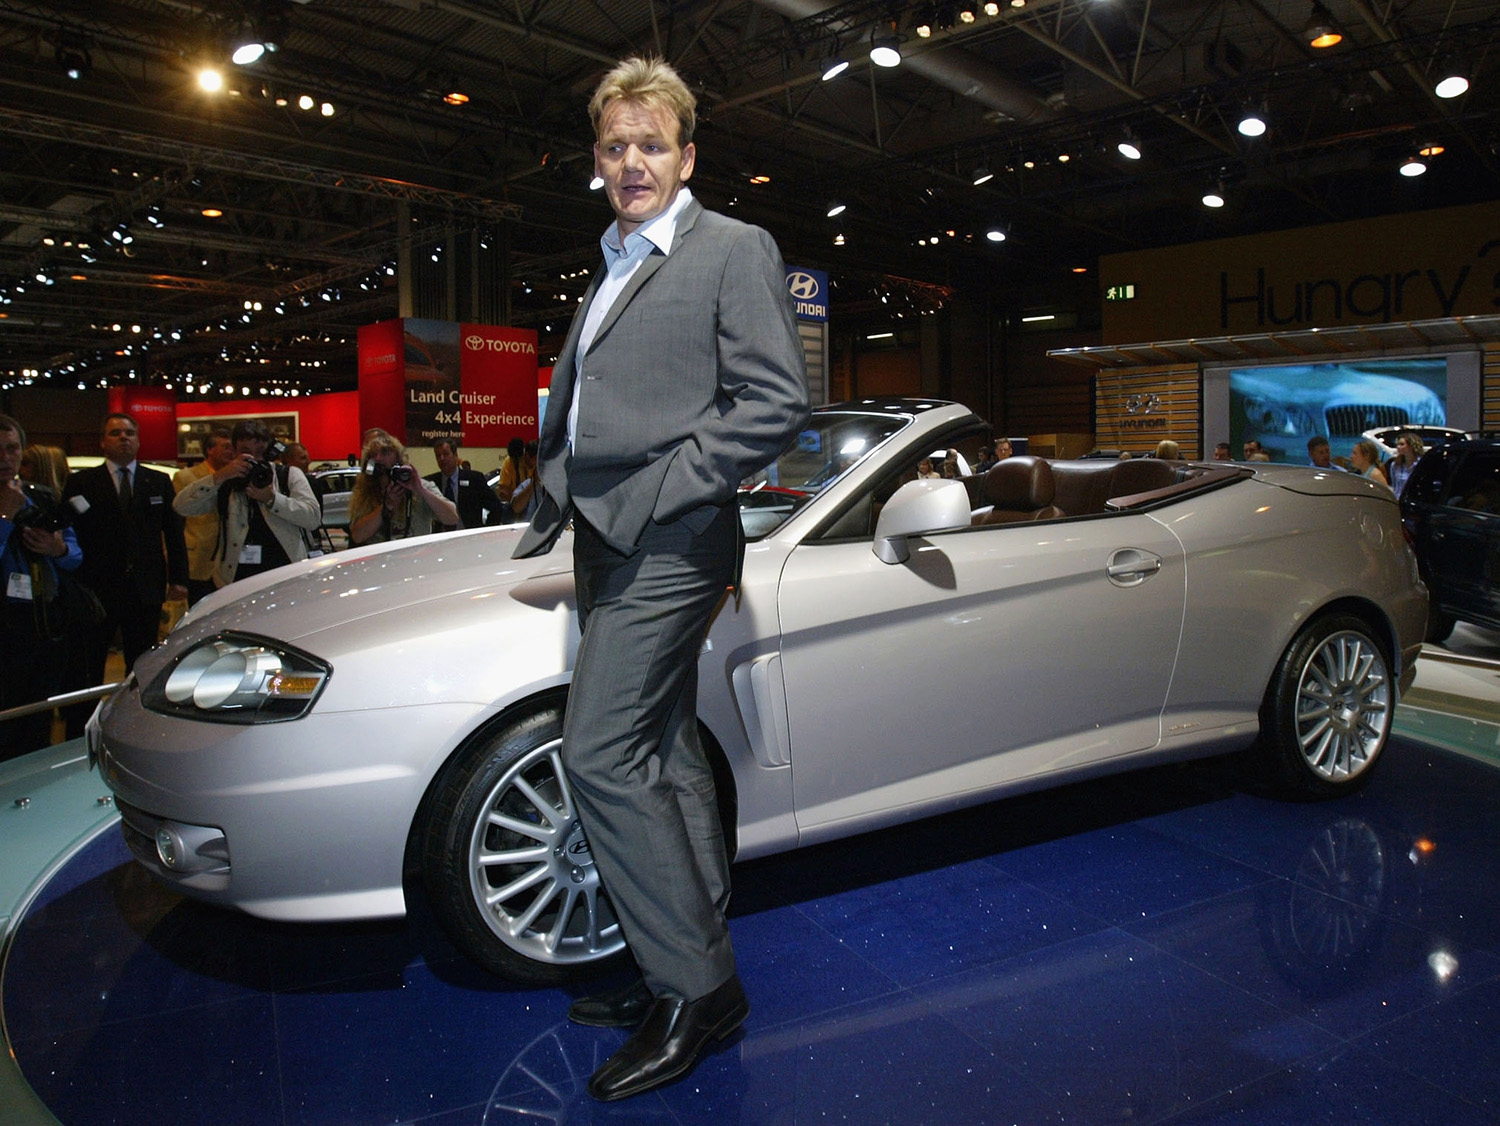 TV Chef Gordon Ramsay at the Hyundai stand at the Sunday Times Motor Show